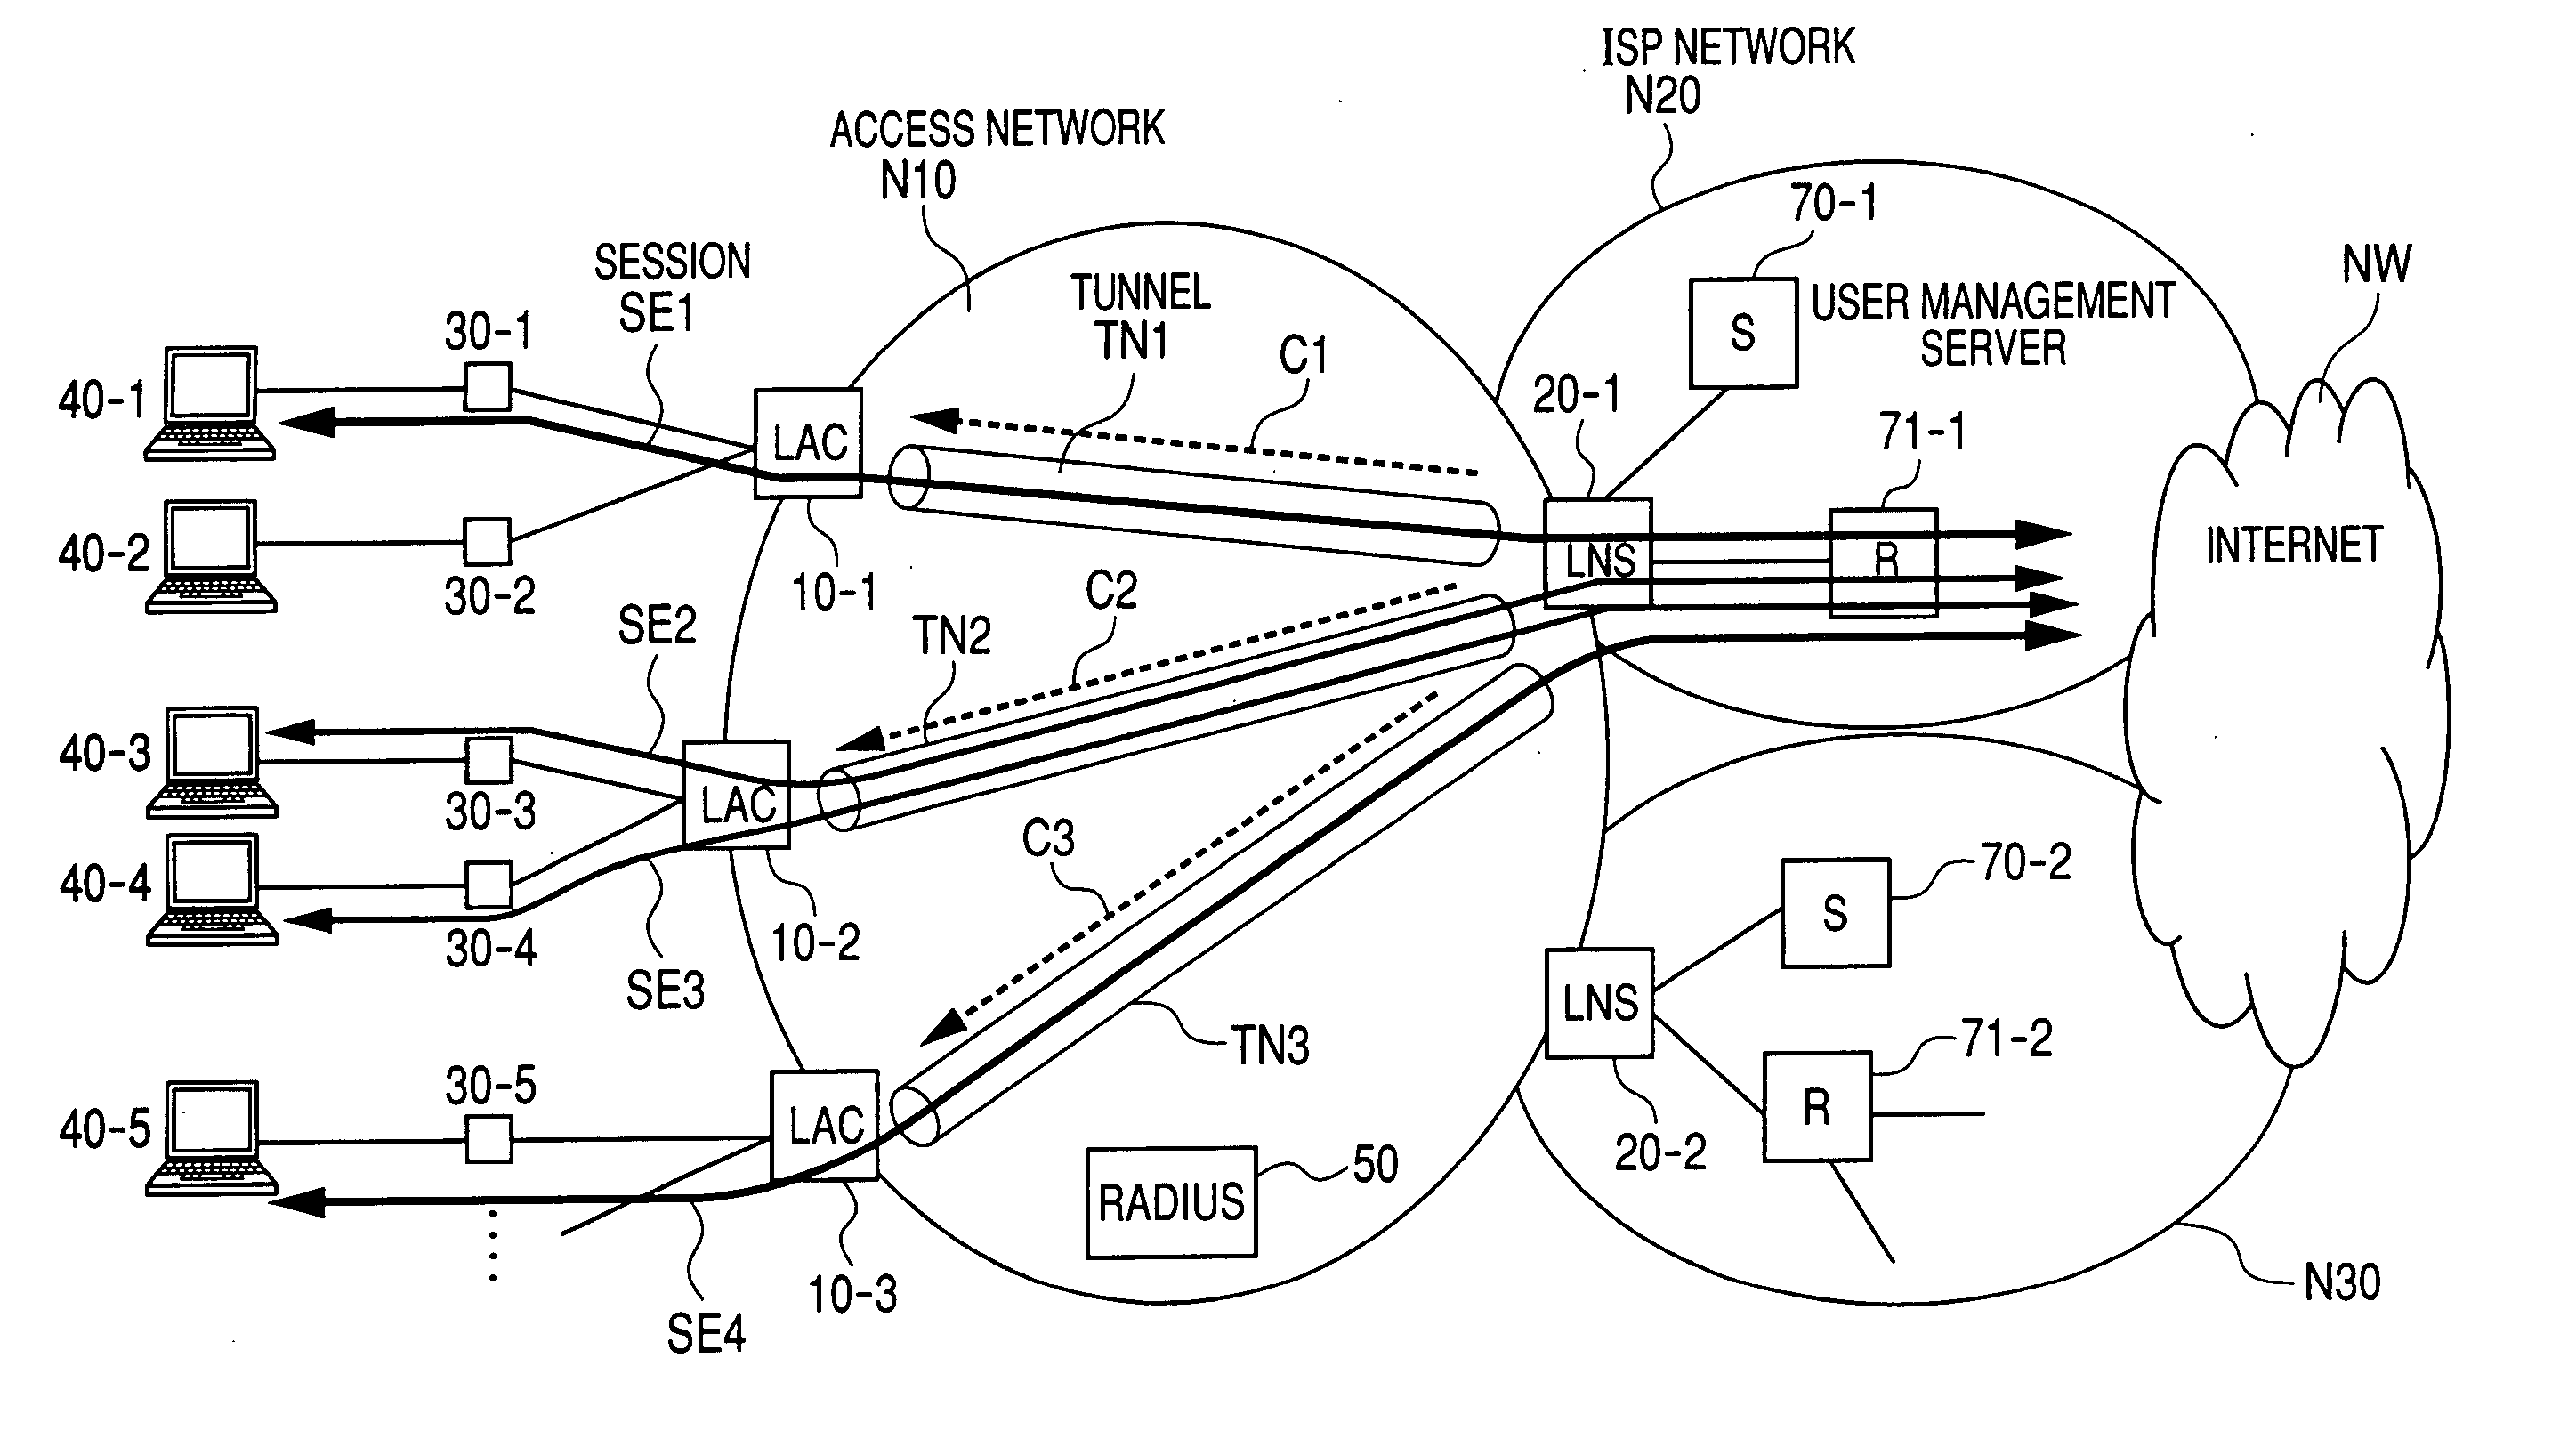 Packet forwarding apparatus and communication bandwidth control method